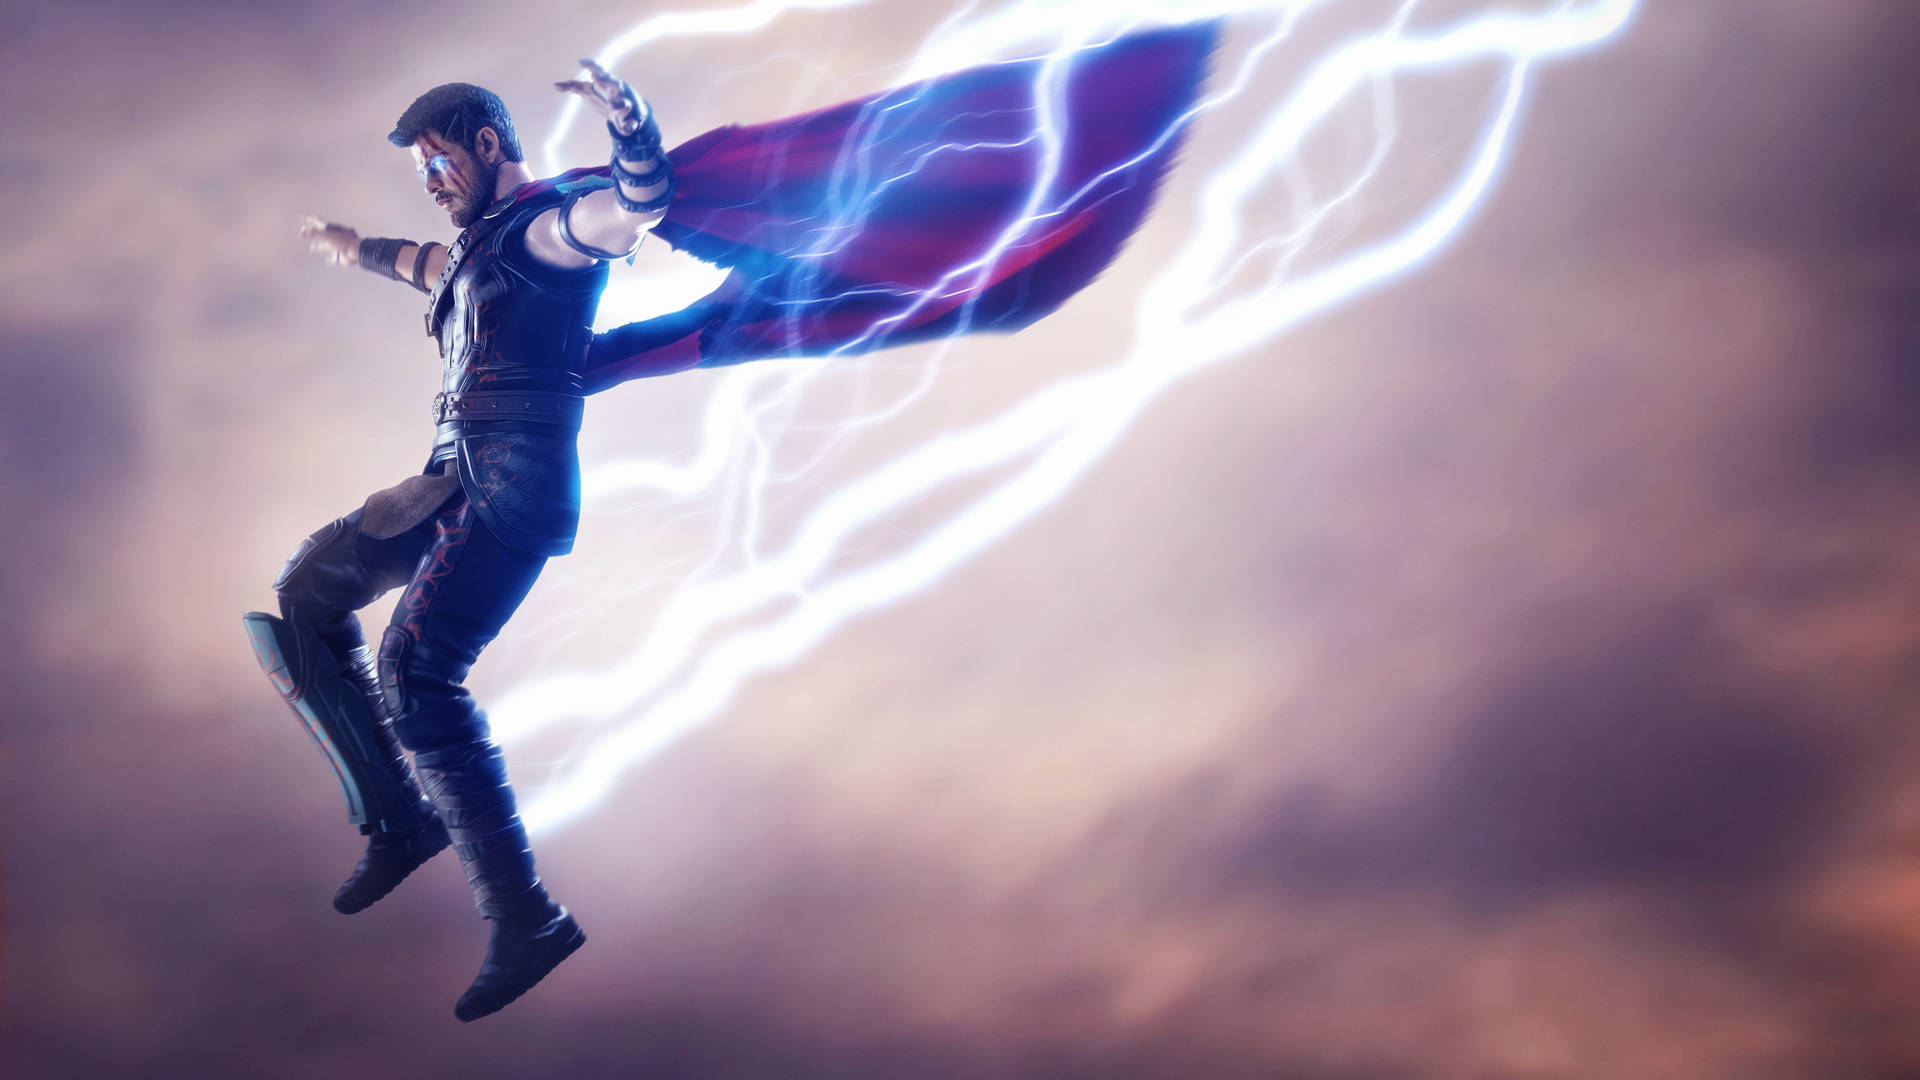 4k Thor: Ragnarok With Lighting Background